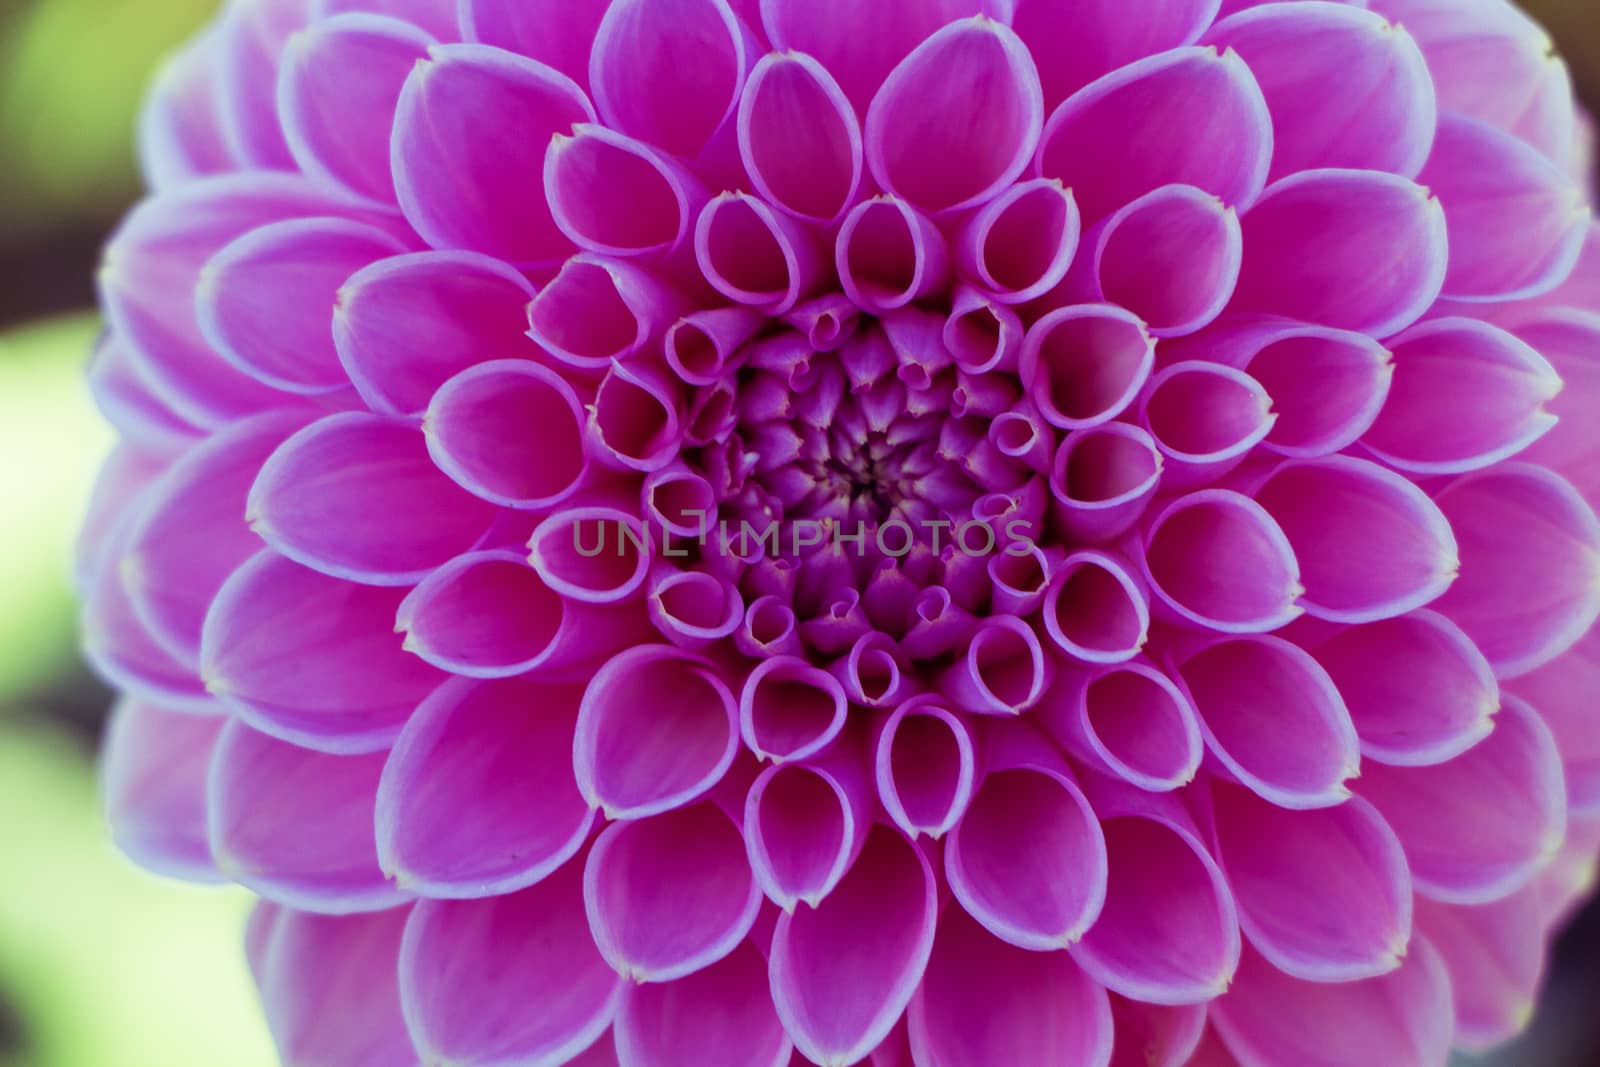 Symmetrical pink flower by Mads_Hjorth_Jakobsen